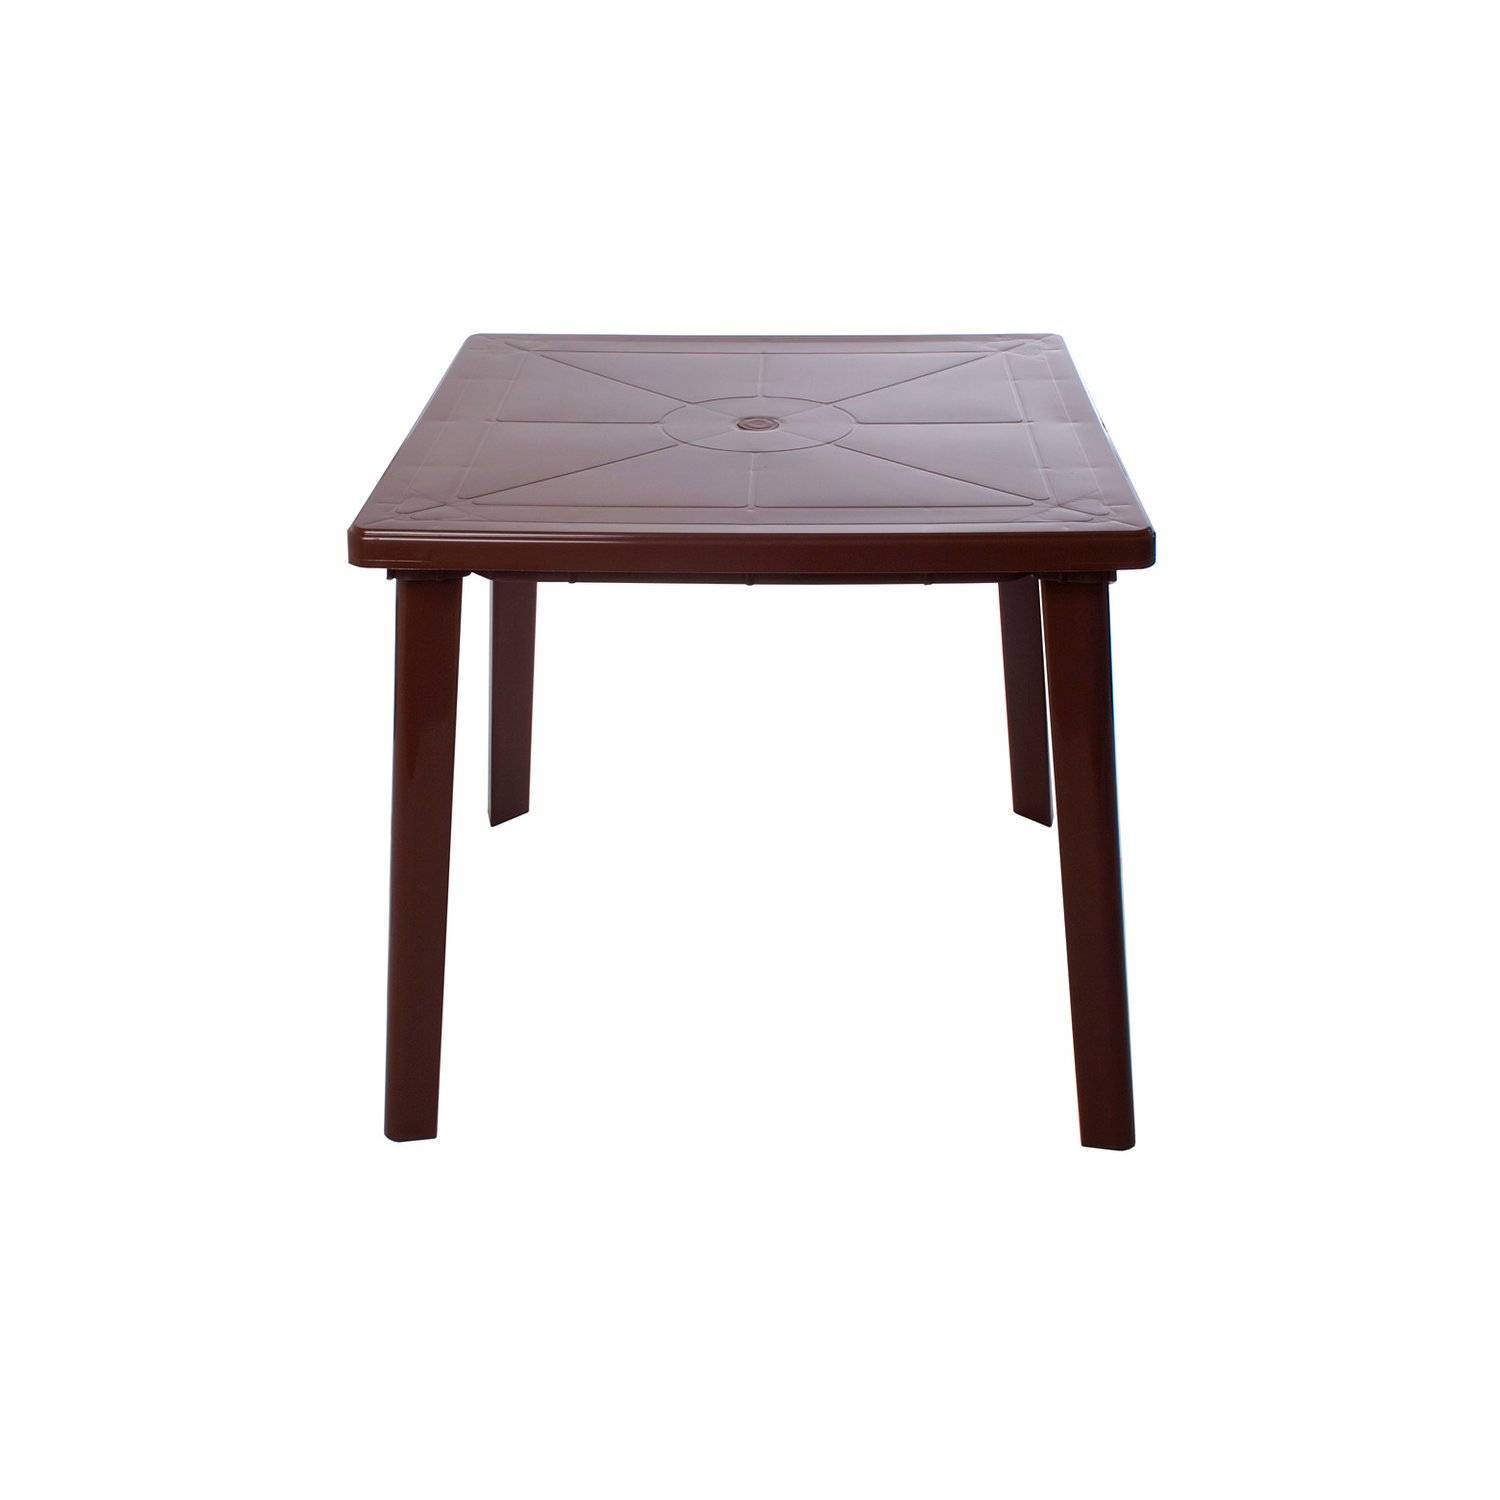 Оби стол. Стол квадратный (800х800х710) мм. Стол квадратный (800*800*740) белый м2593. Стол пластиковый 800х800х710. Стол квадратный Квадро 800x800 мм.